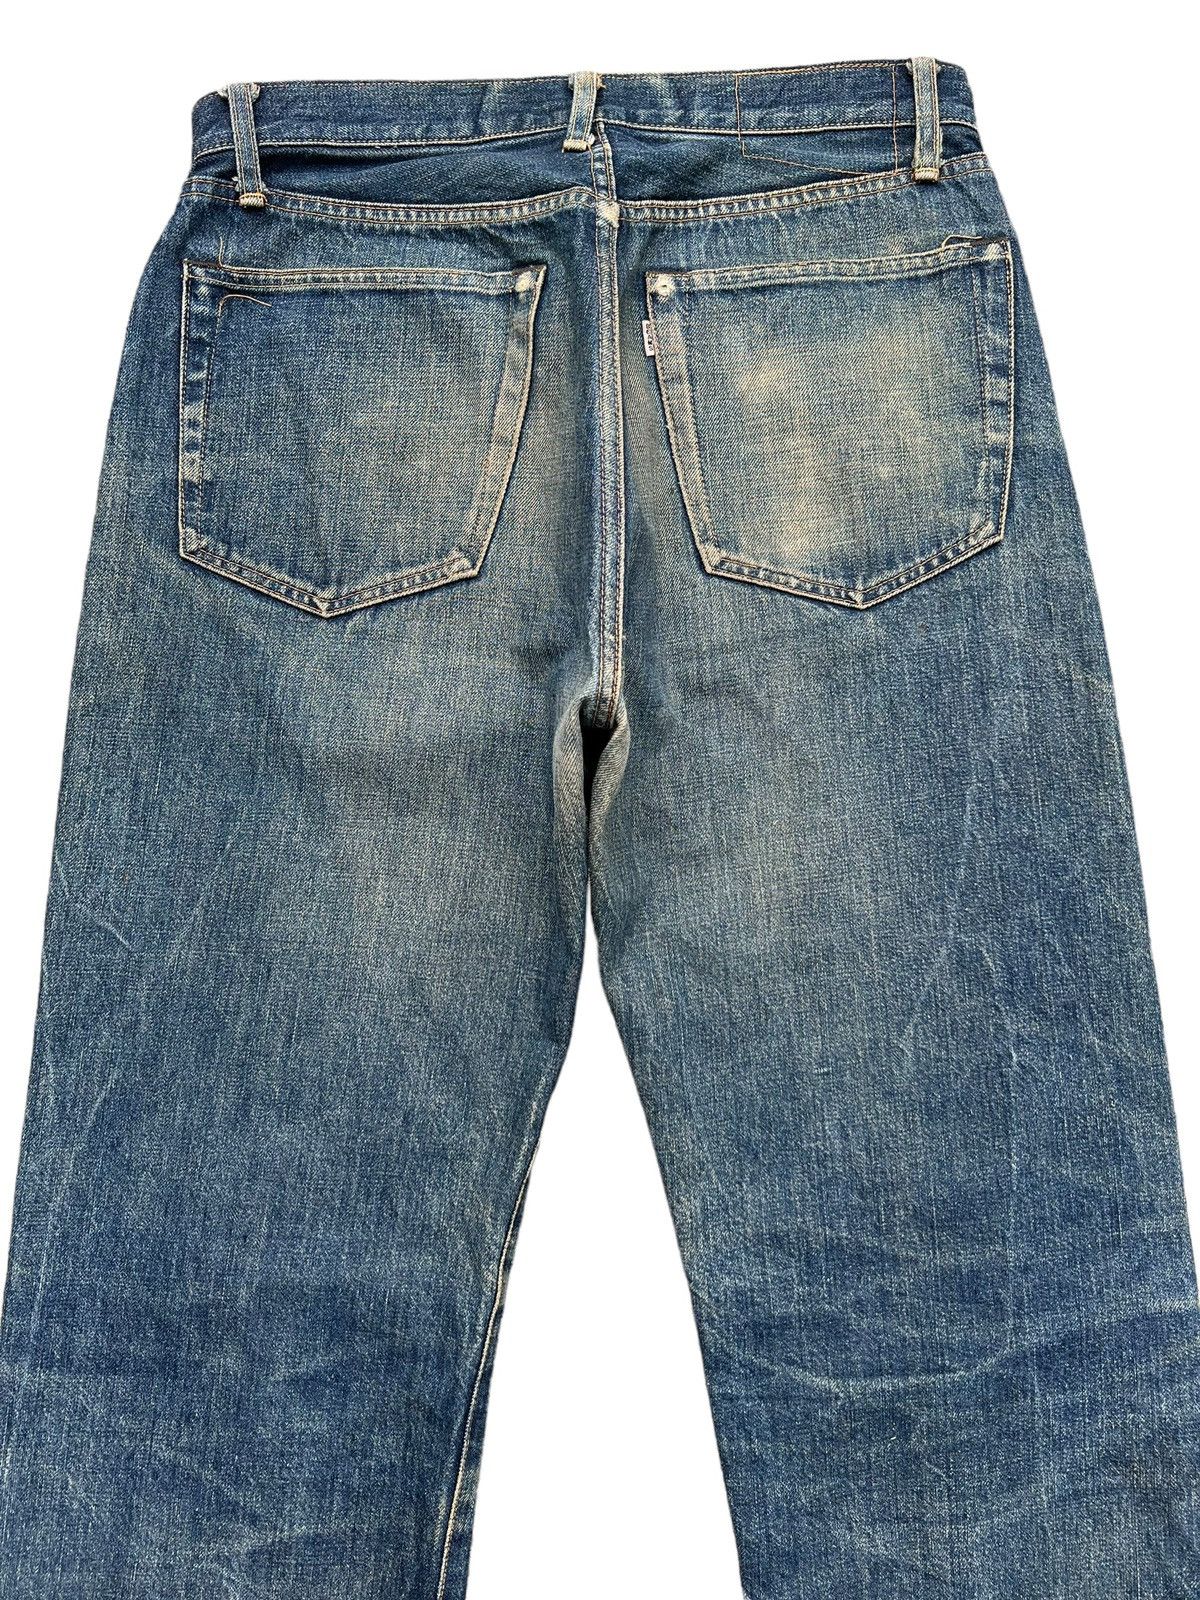 Vtg Beams Plus Japan Selvedge Distressed Mudwash Denim Jeans - 5